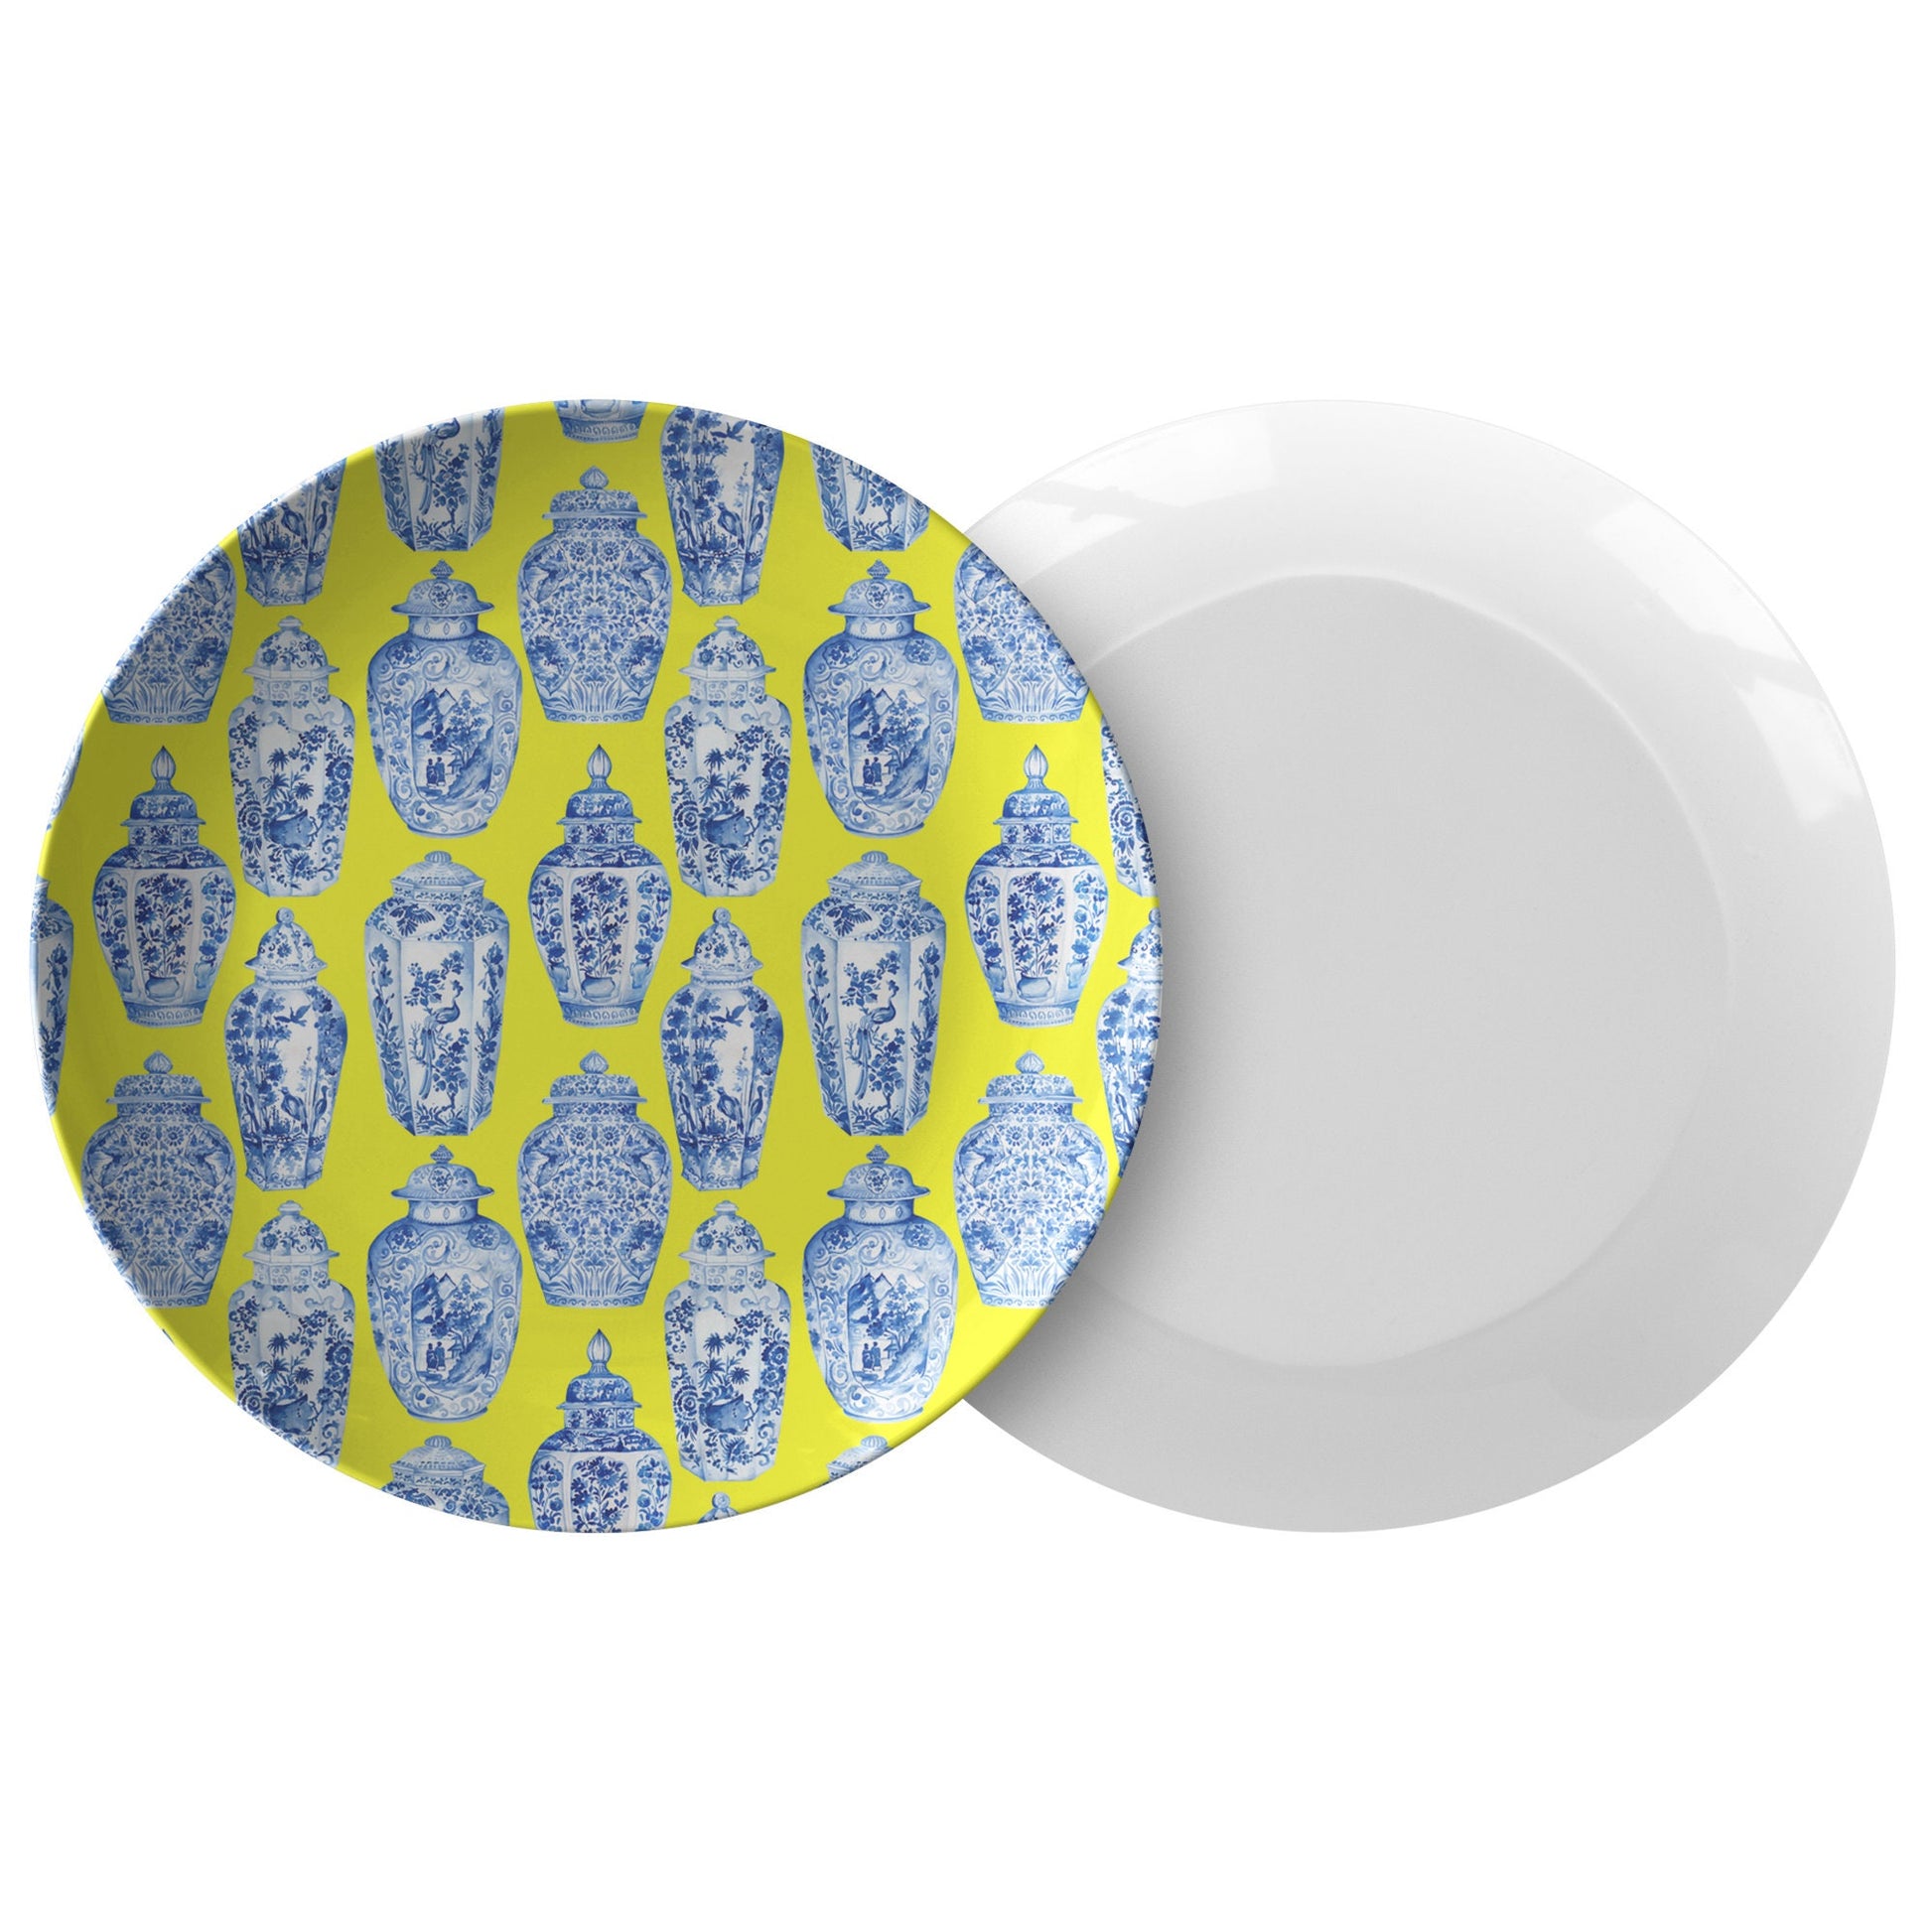 Blue & White Ginger Jars Print Plate Set, Yellow Chinoiserie